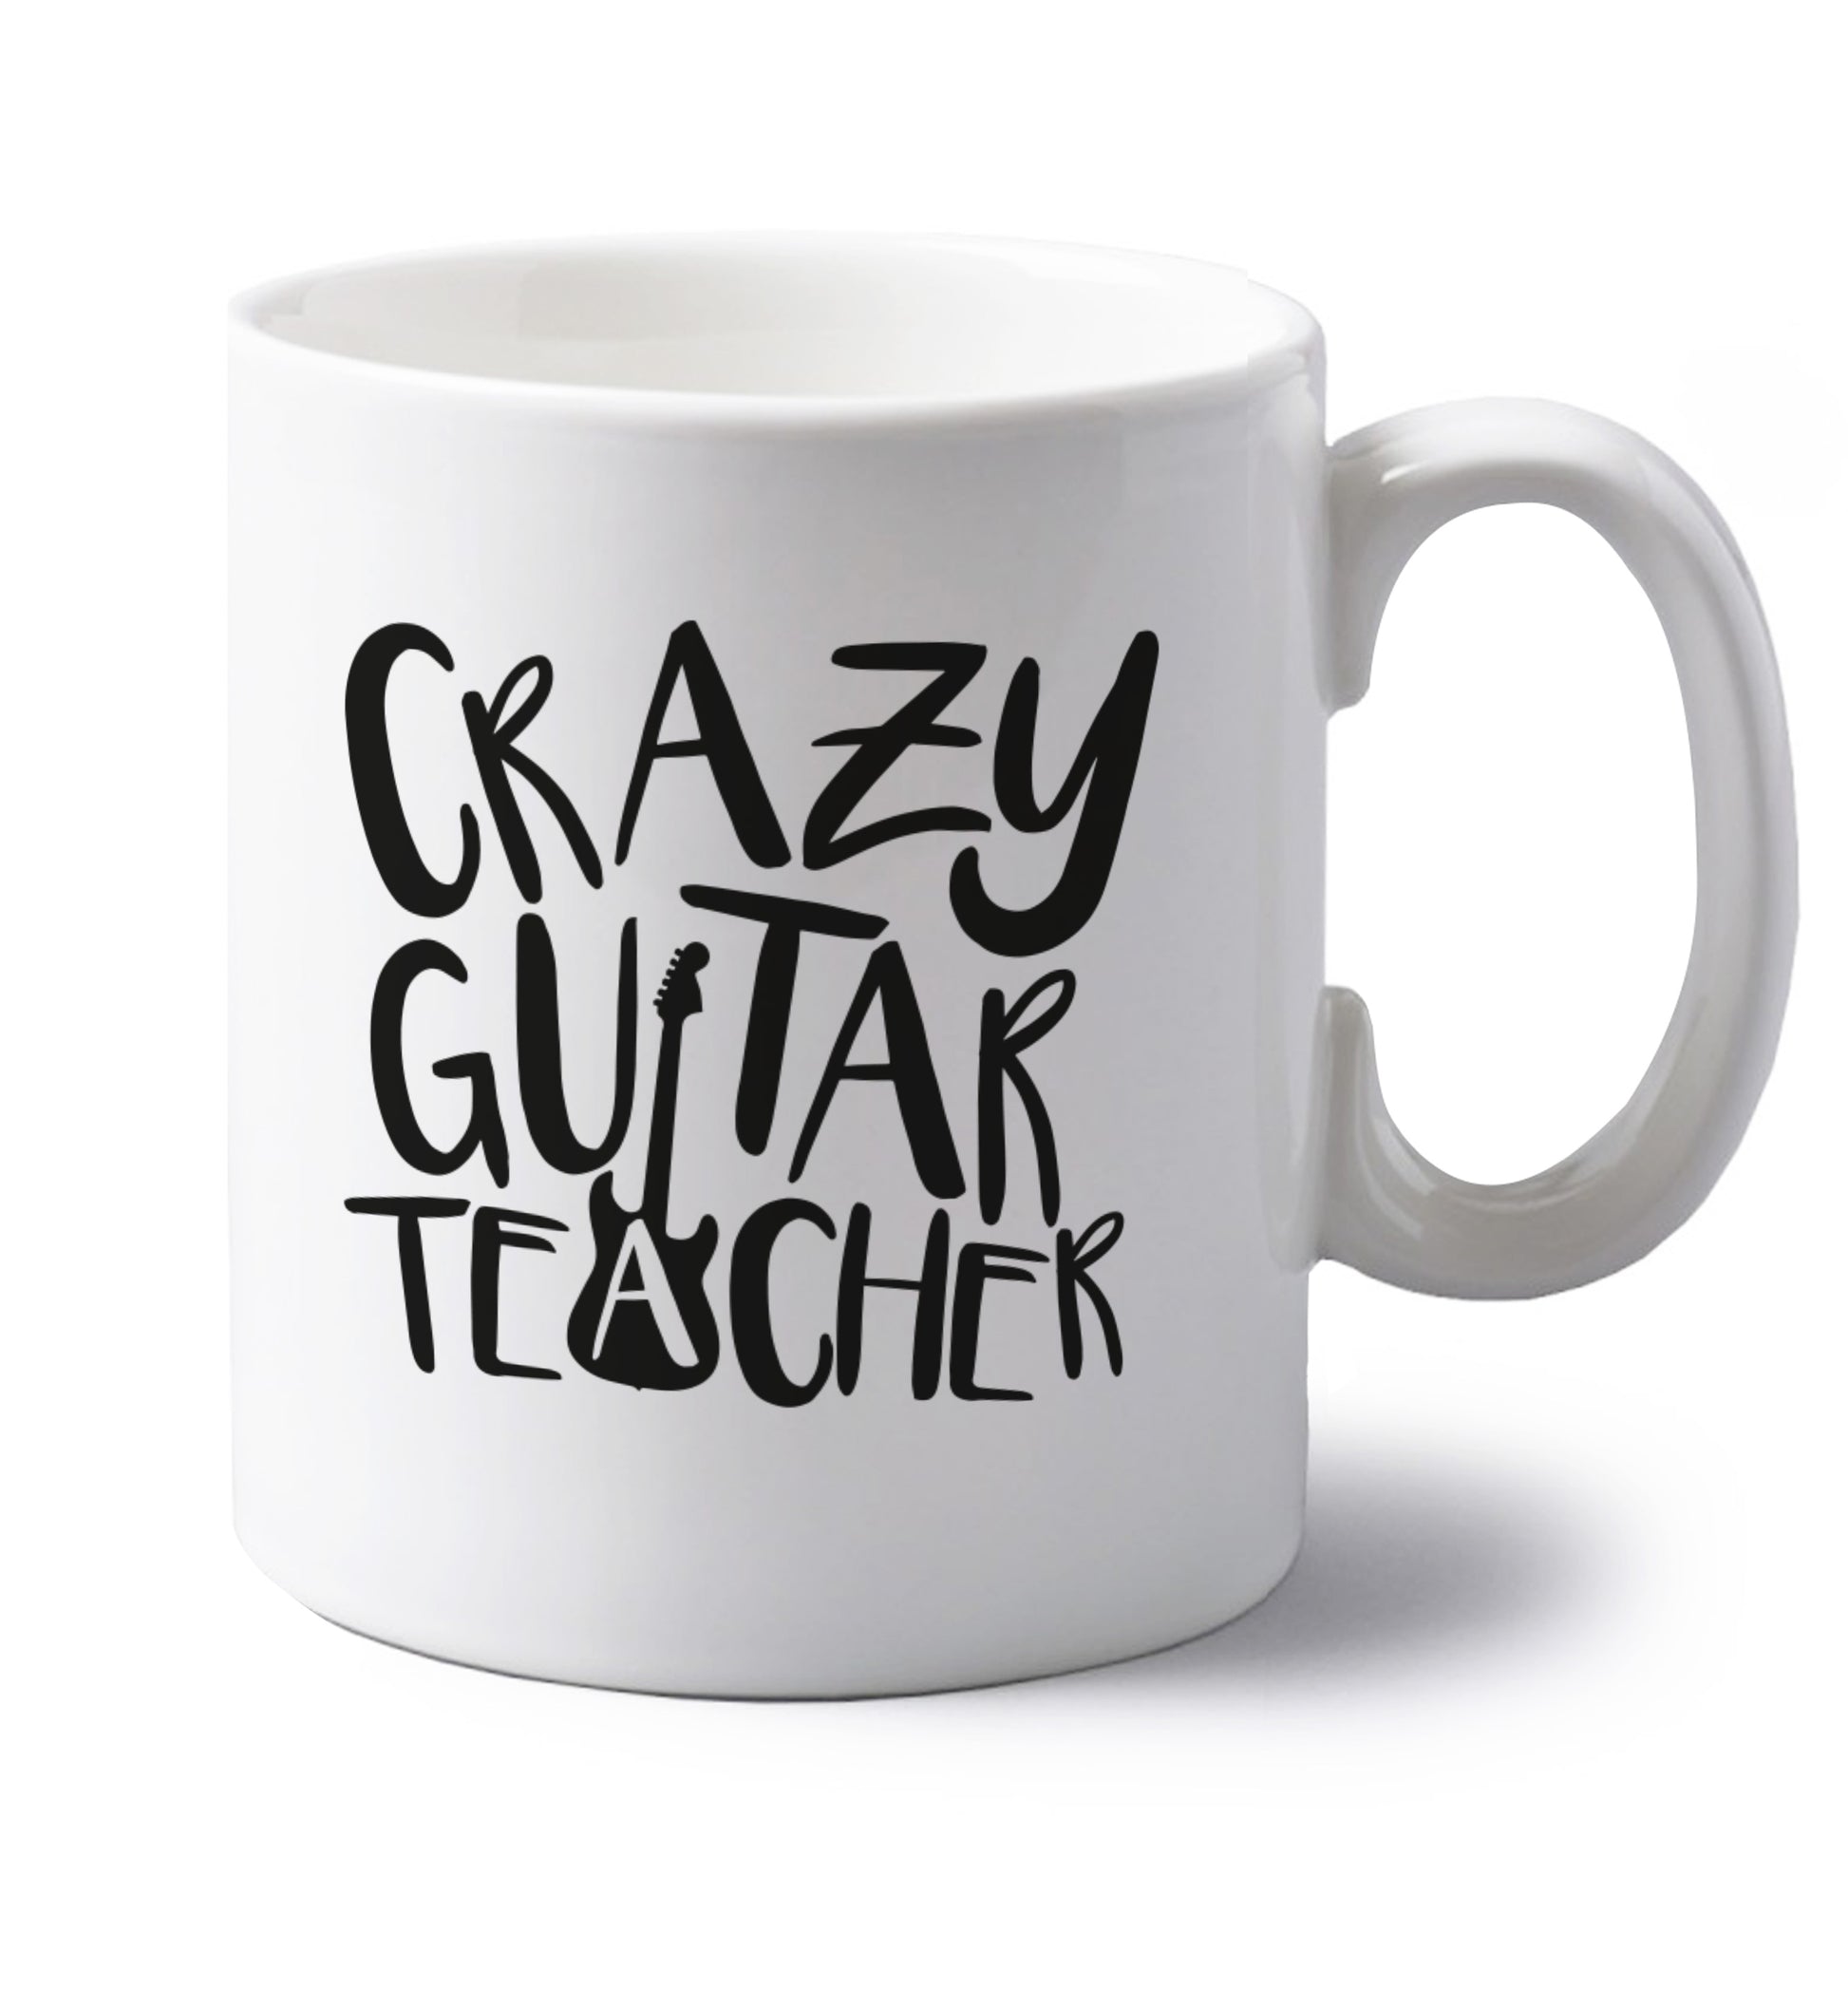 Crazy guitar teacher left handed white ceramic mug 